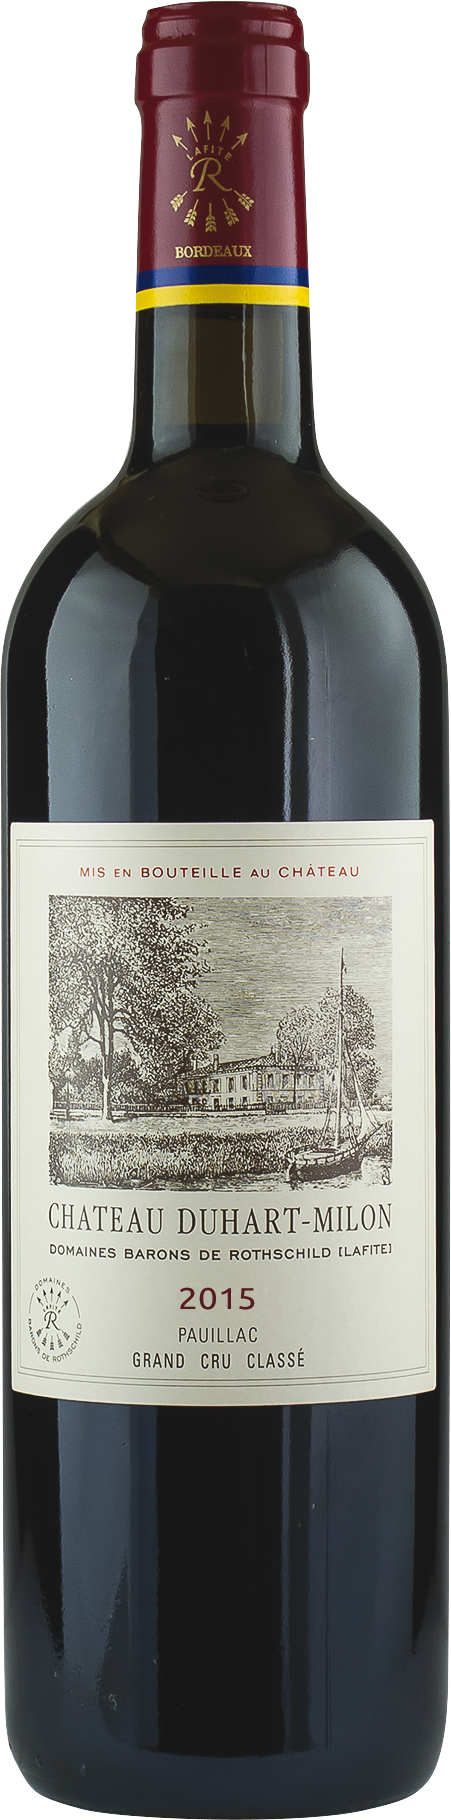 2015er Château Duhart-Milion-Rothschild